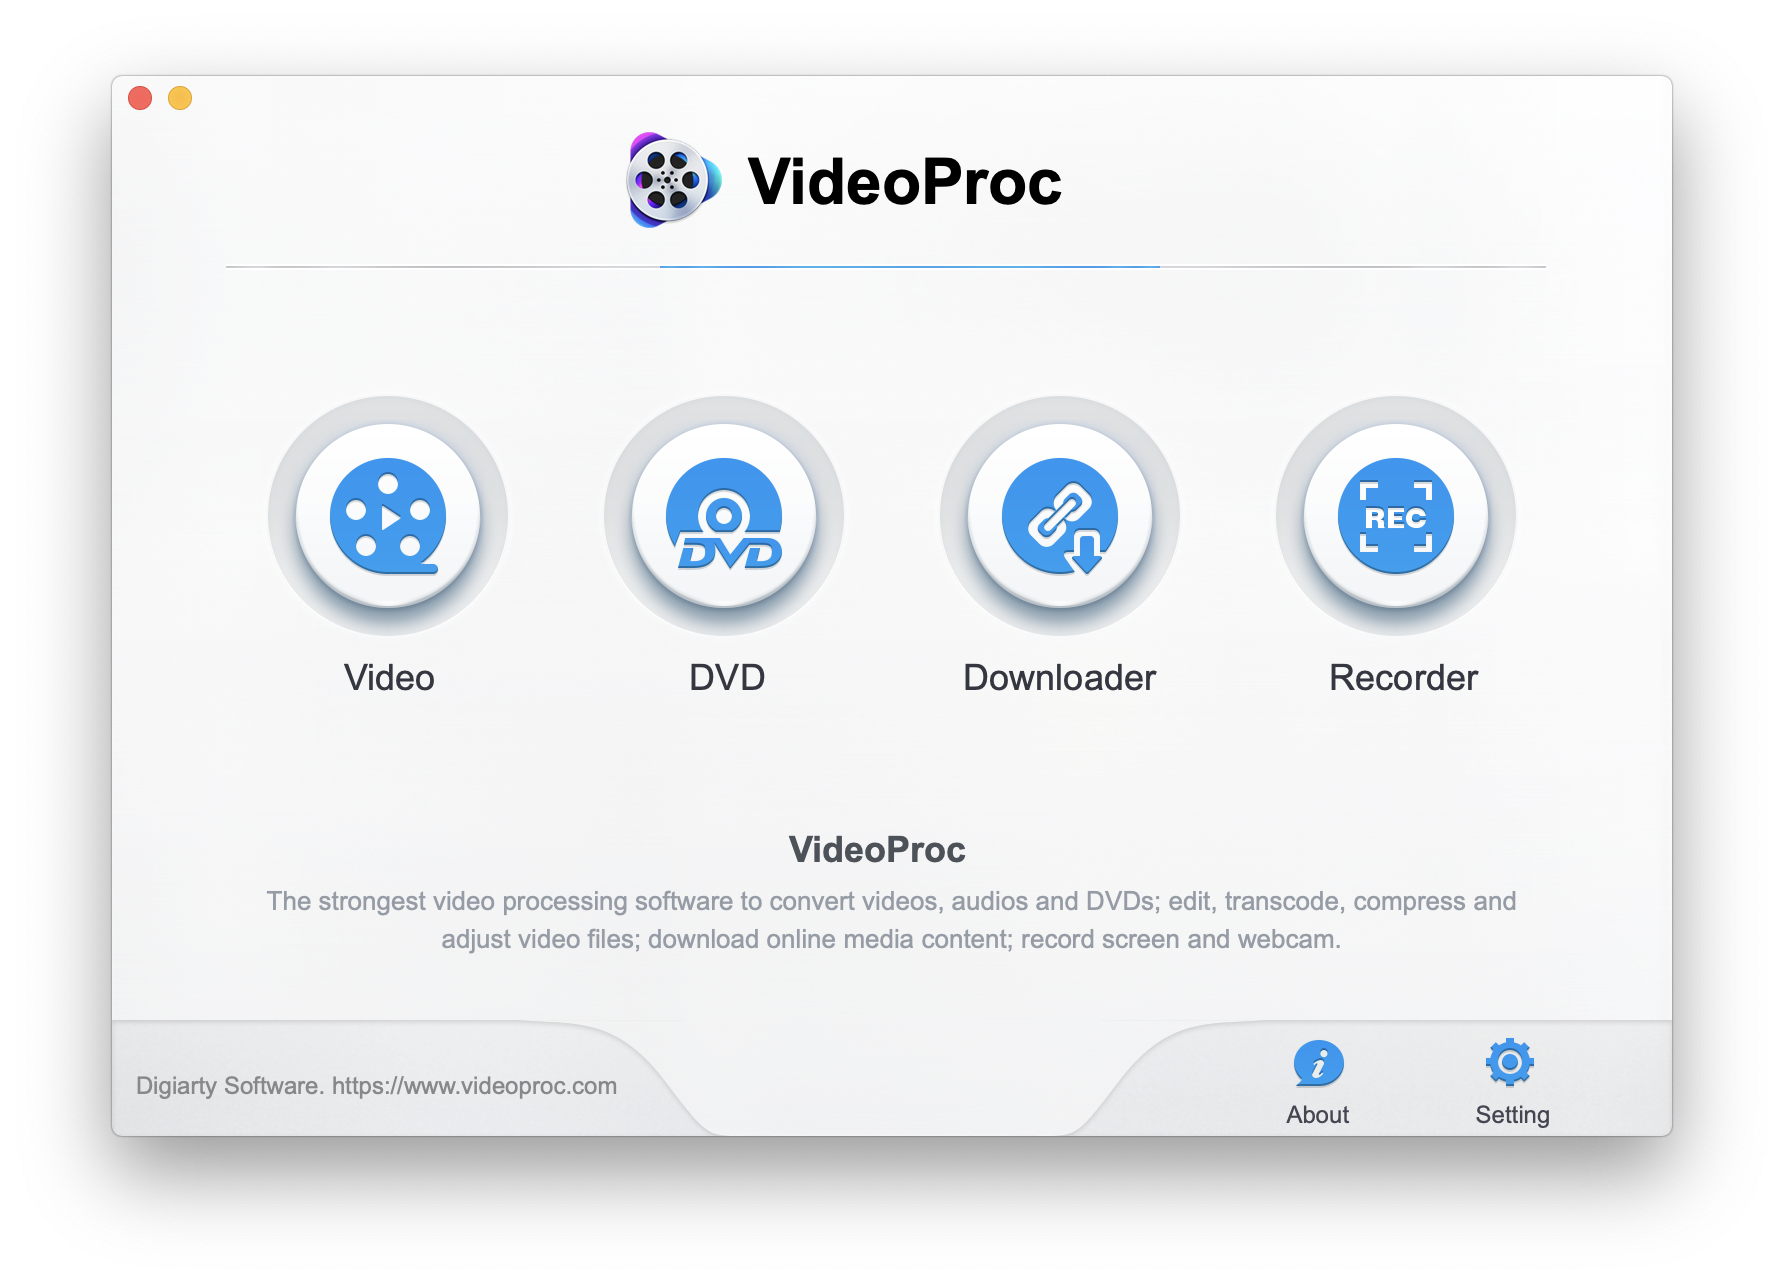 videoproc analyze fails on vimeo